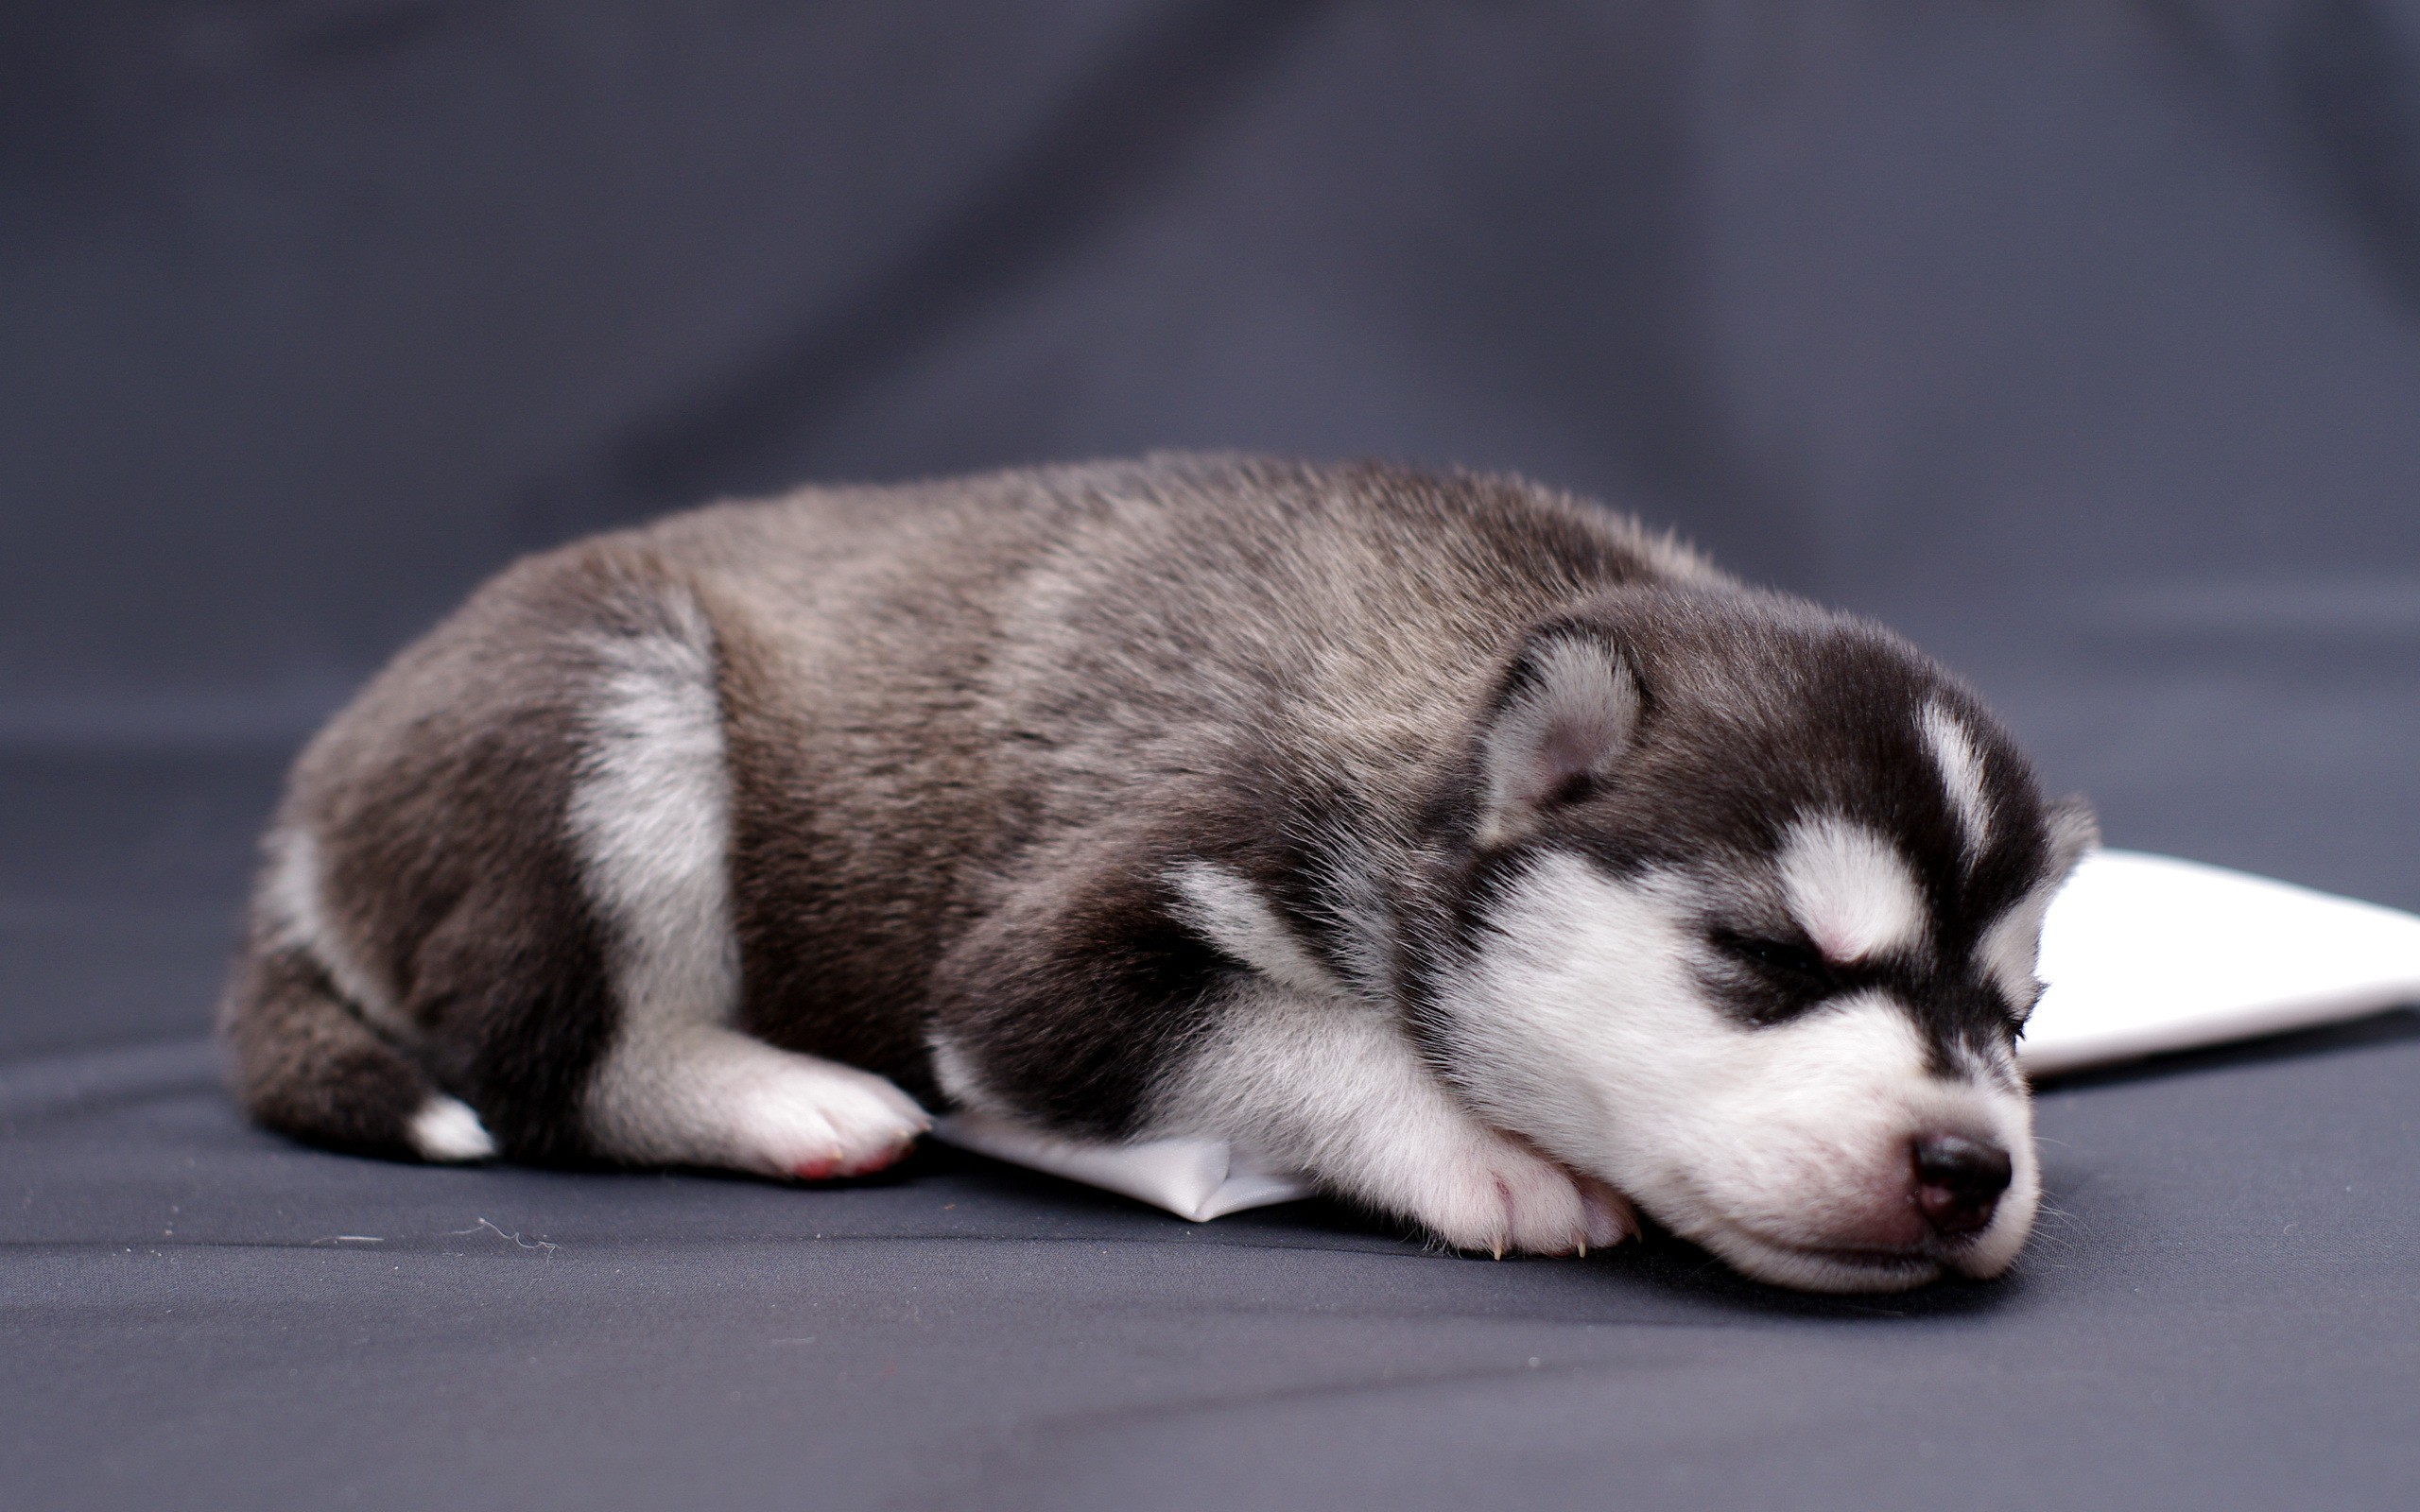 General 2560x1600 puppies Siberian Husky  dog animals mammals closeup sleeping on the floor baby animals